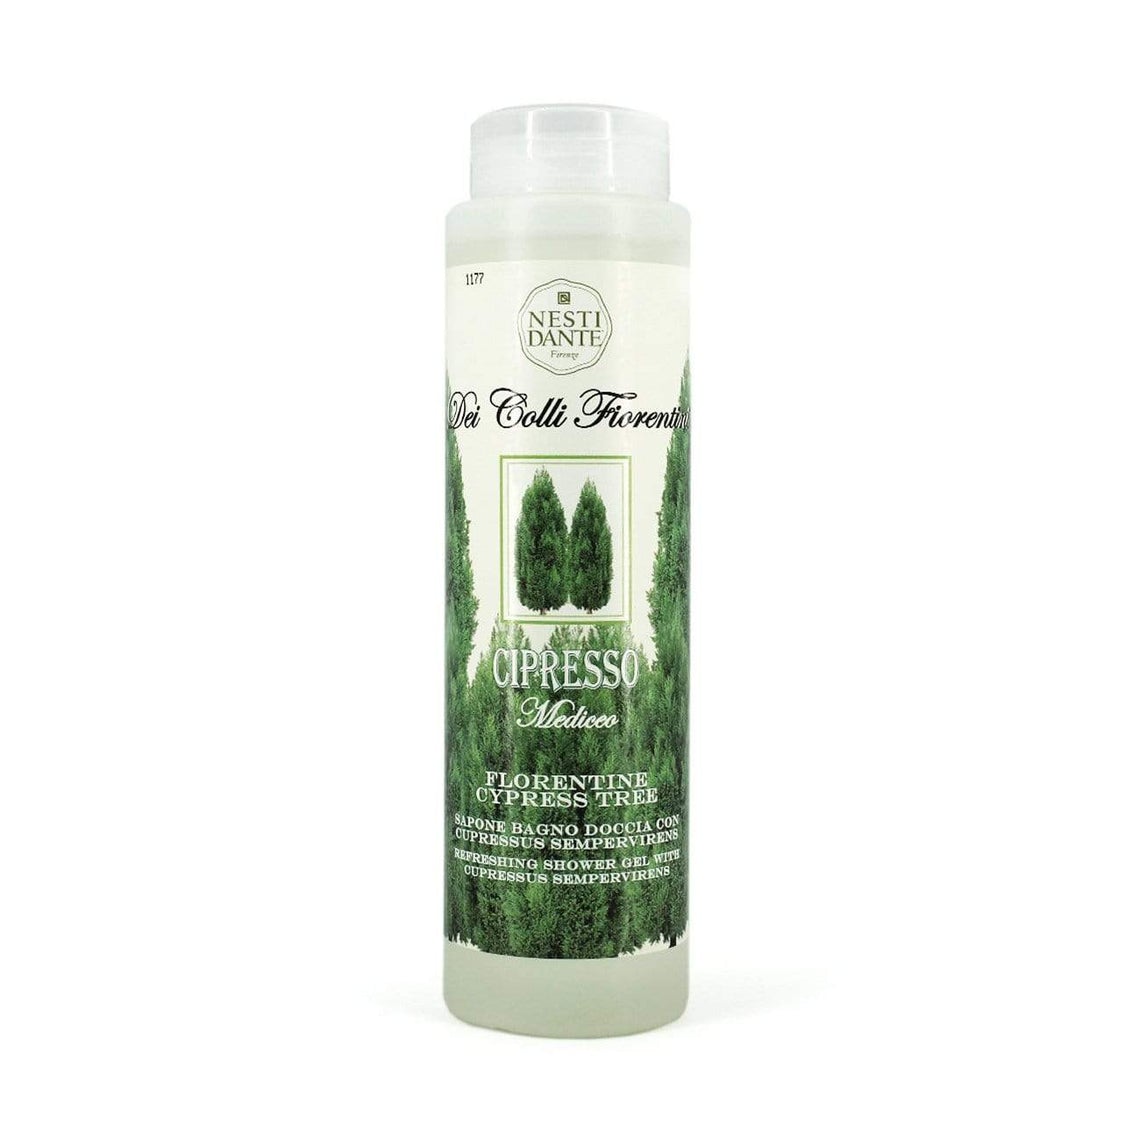 Nesti Dante Гель для душа Cypress Shower Gel освежающий 300мл nesti dante florentine cypress tree refreshing shower gel